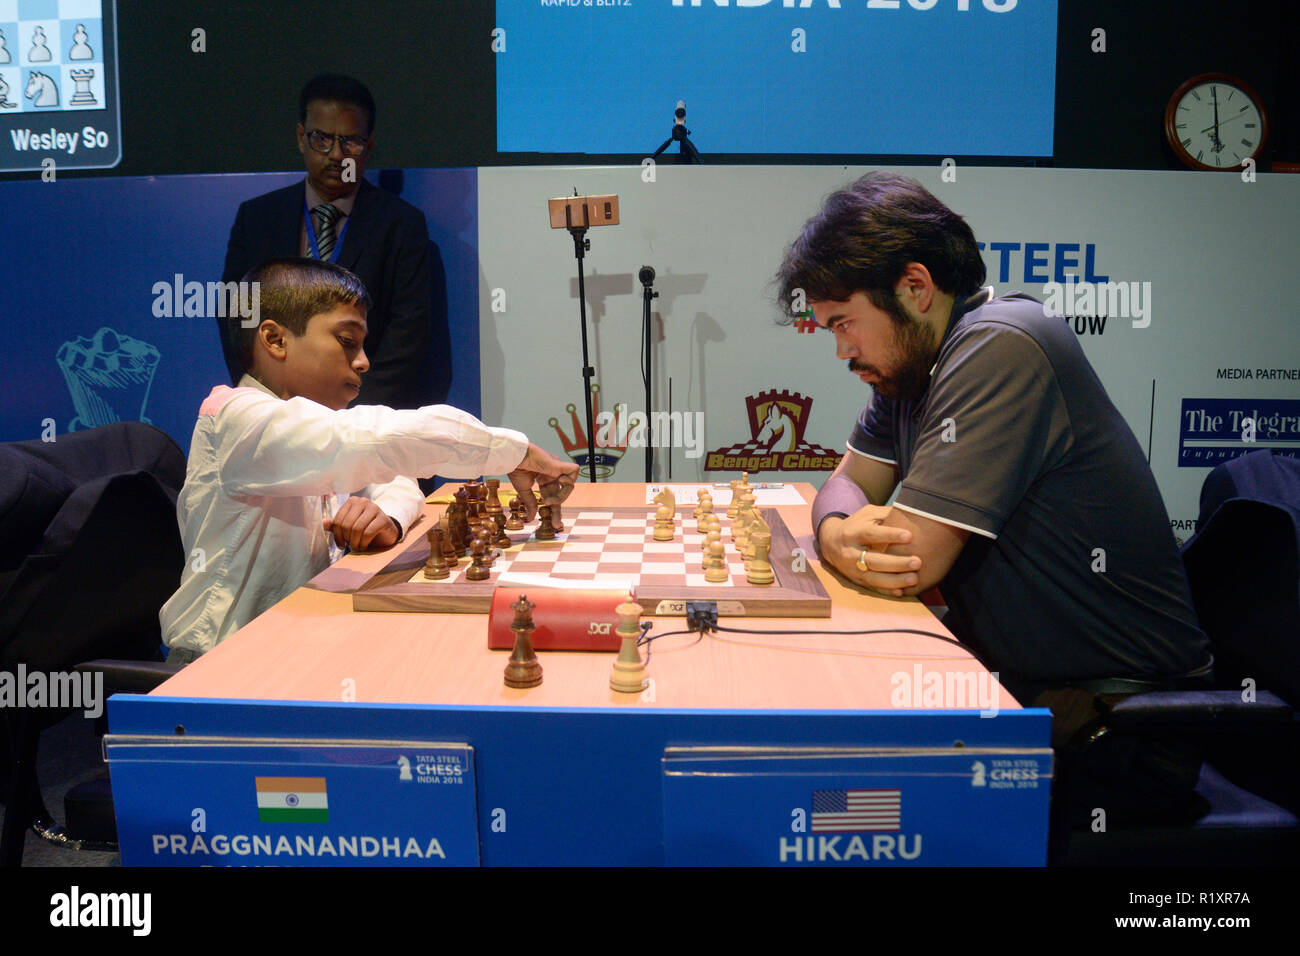 Tata Steel Chess India - Live!